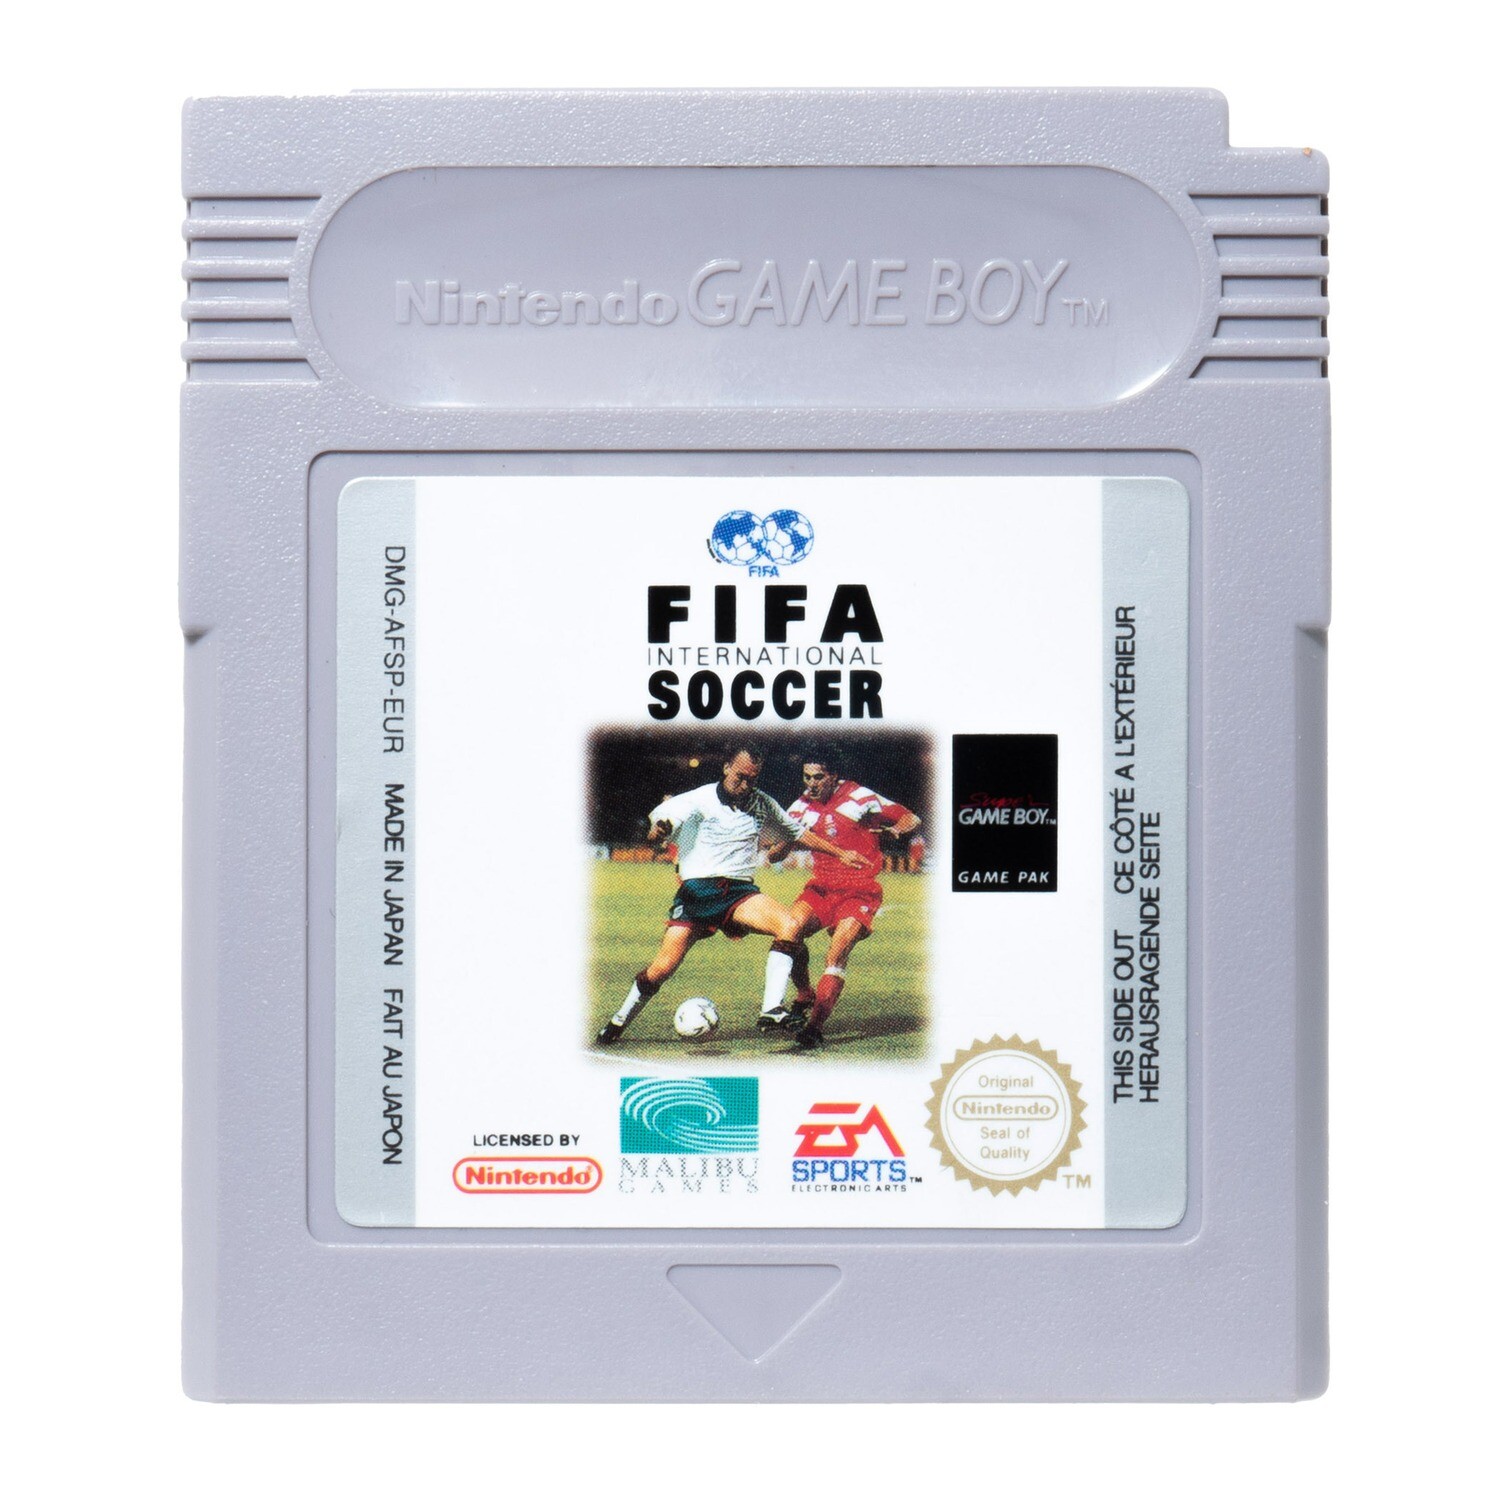 FIFA International Soccer (Game Boy), Game: FIFA International Soccer (Grade A)